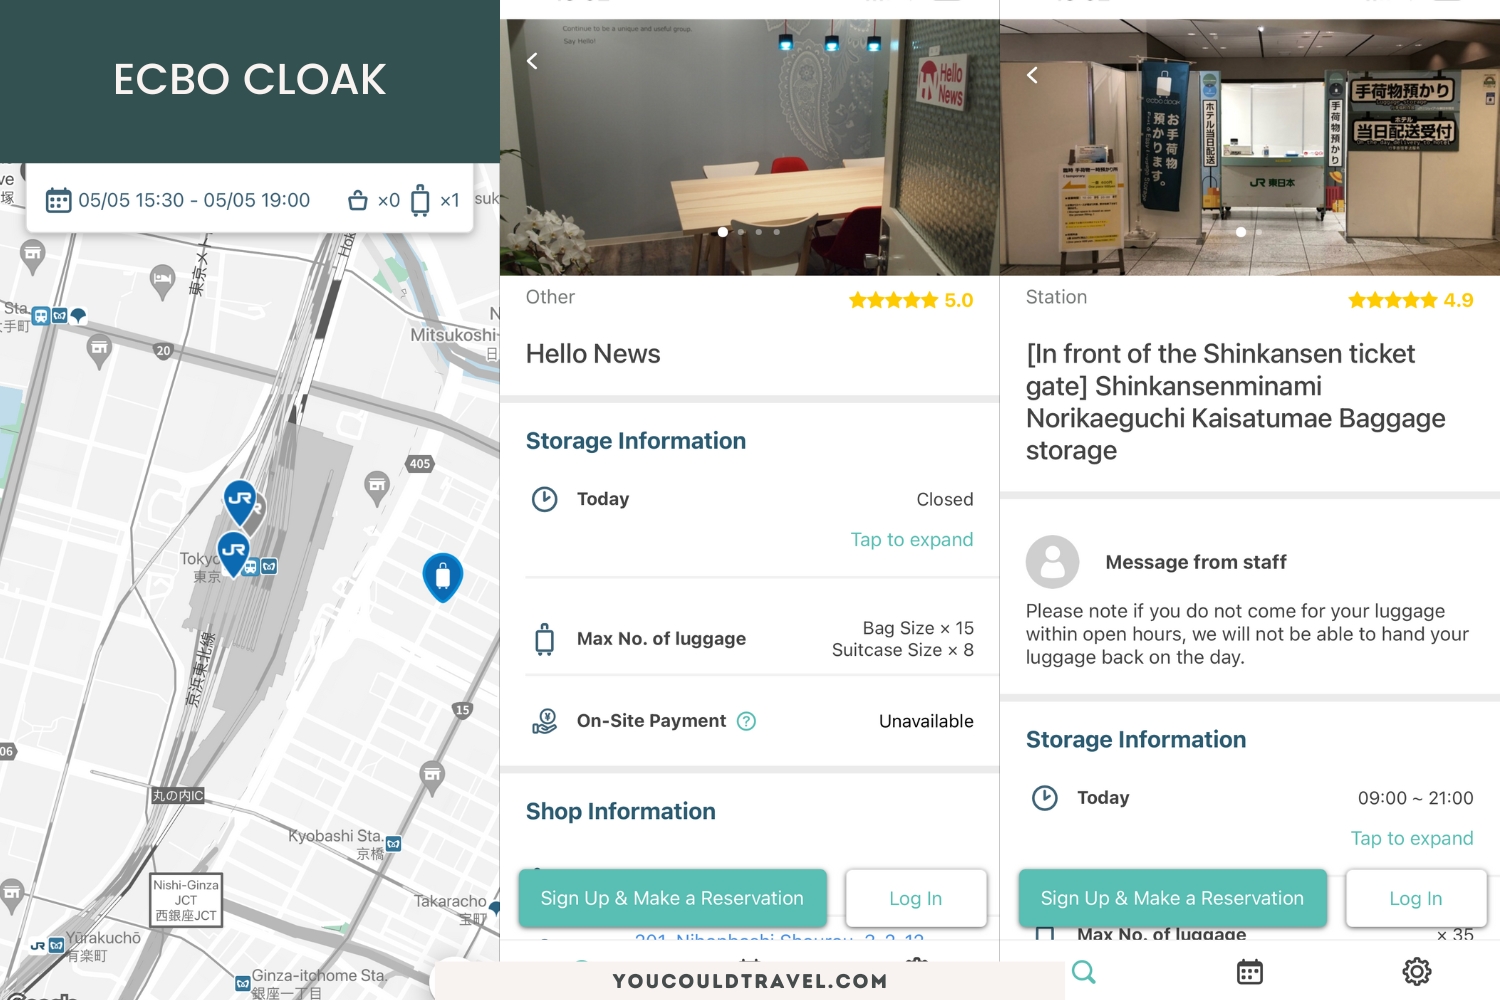 iOS screenshots of Ecbo cloak app